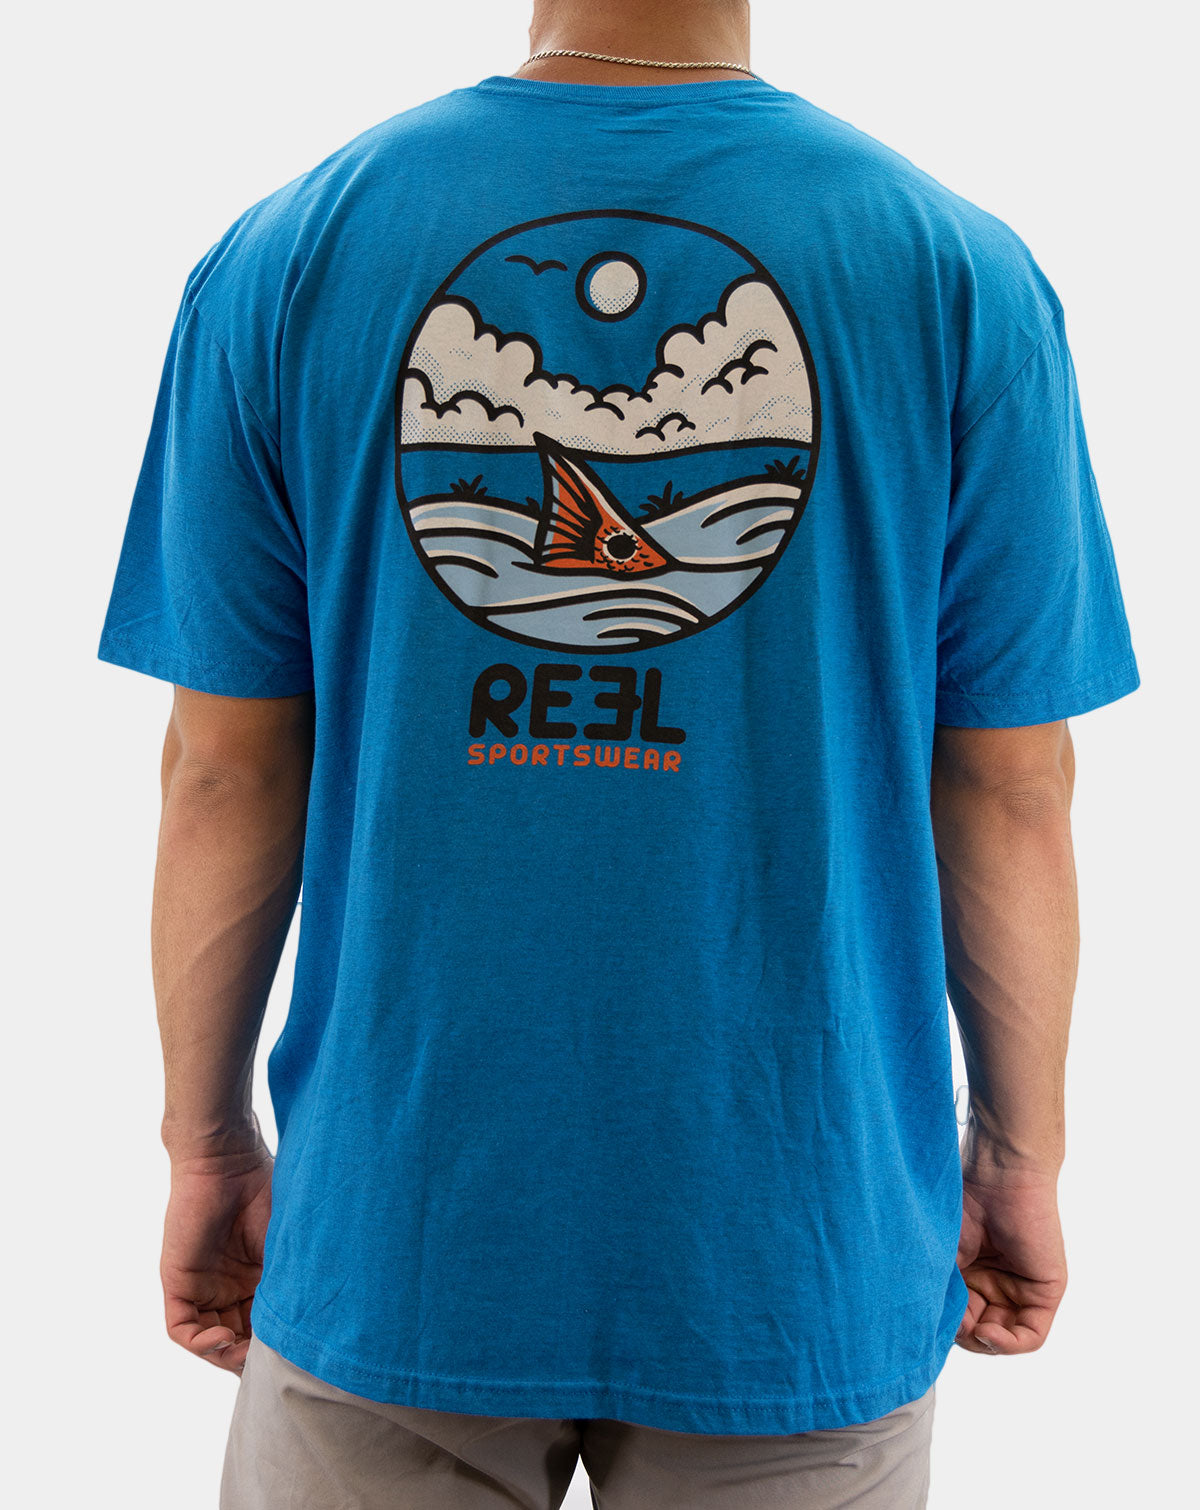 reel legends fishing shirt - Gem